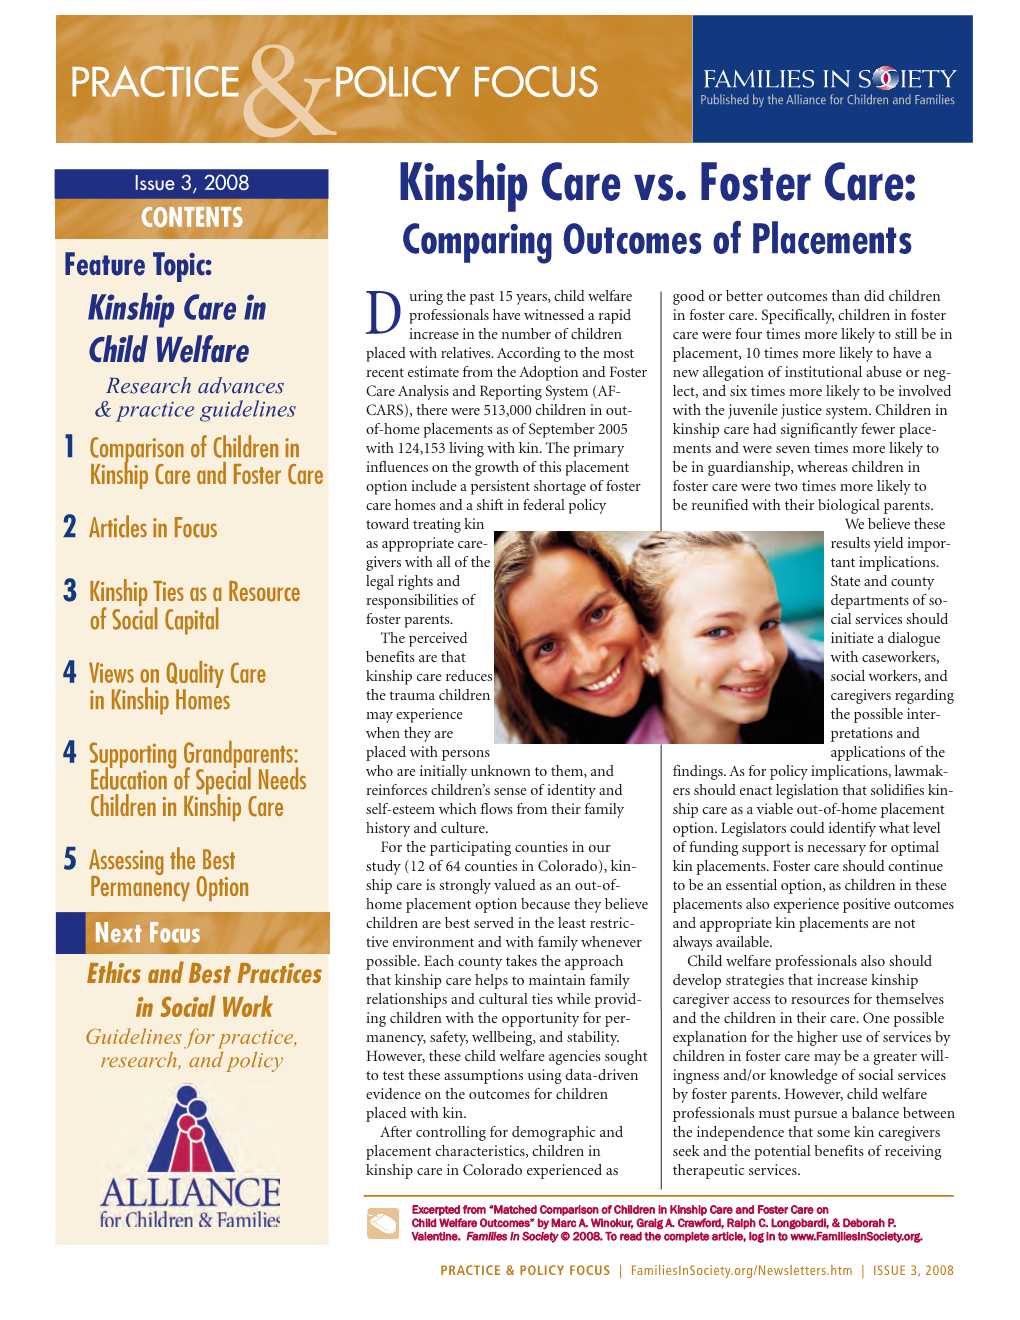 Kinship Care Vs. Foster Care